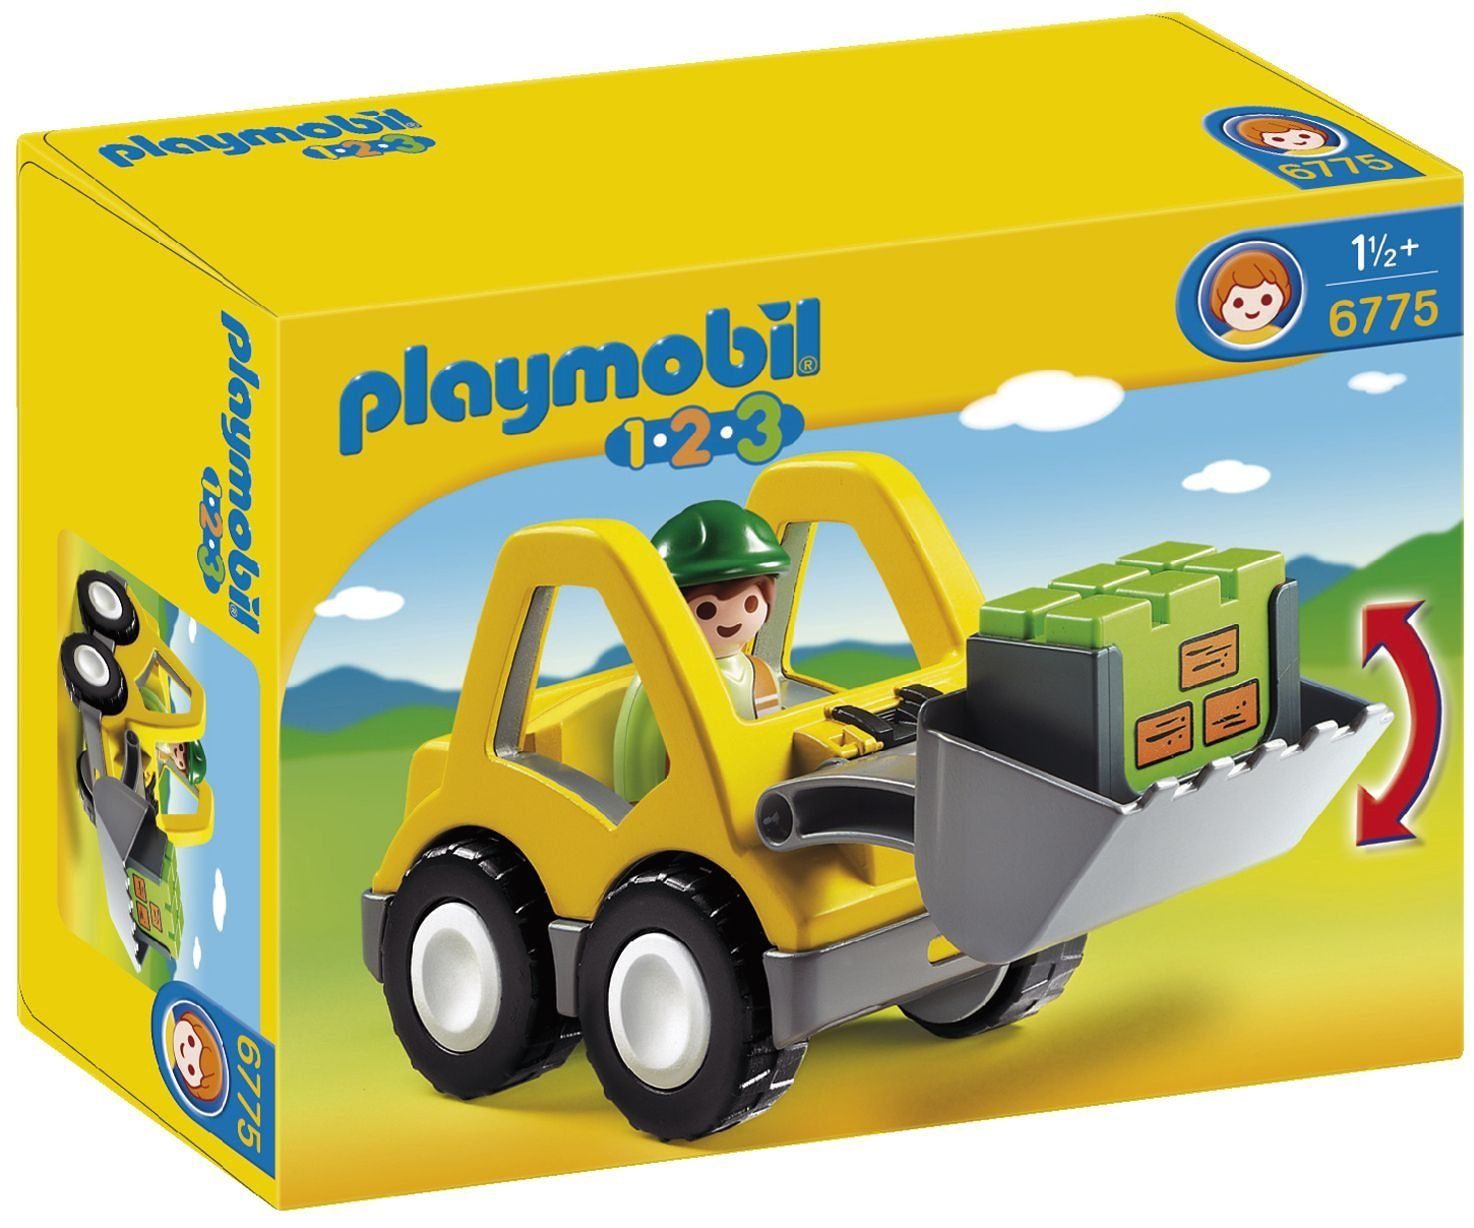 Made Konstruktions-Spielset 1-2-3, Radlader Europe (6775), Playmobil Playmobil® in